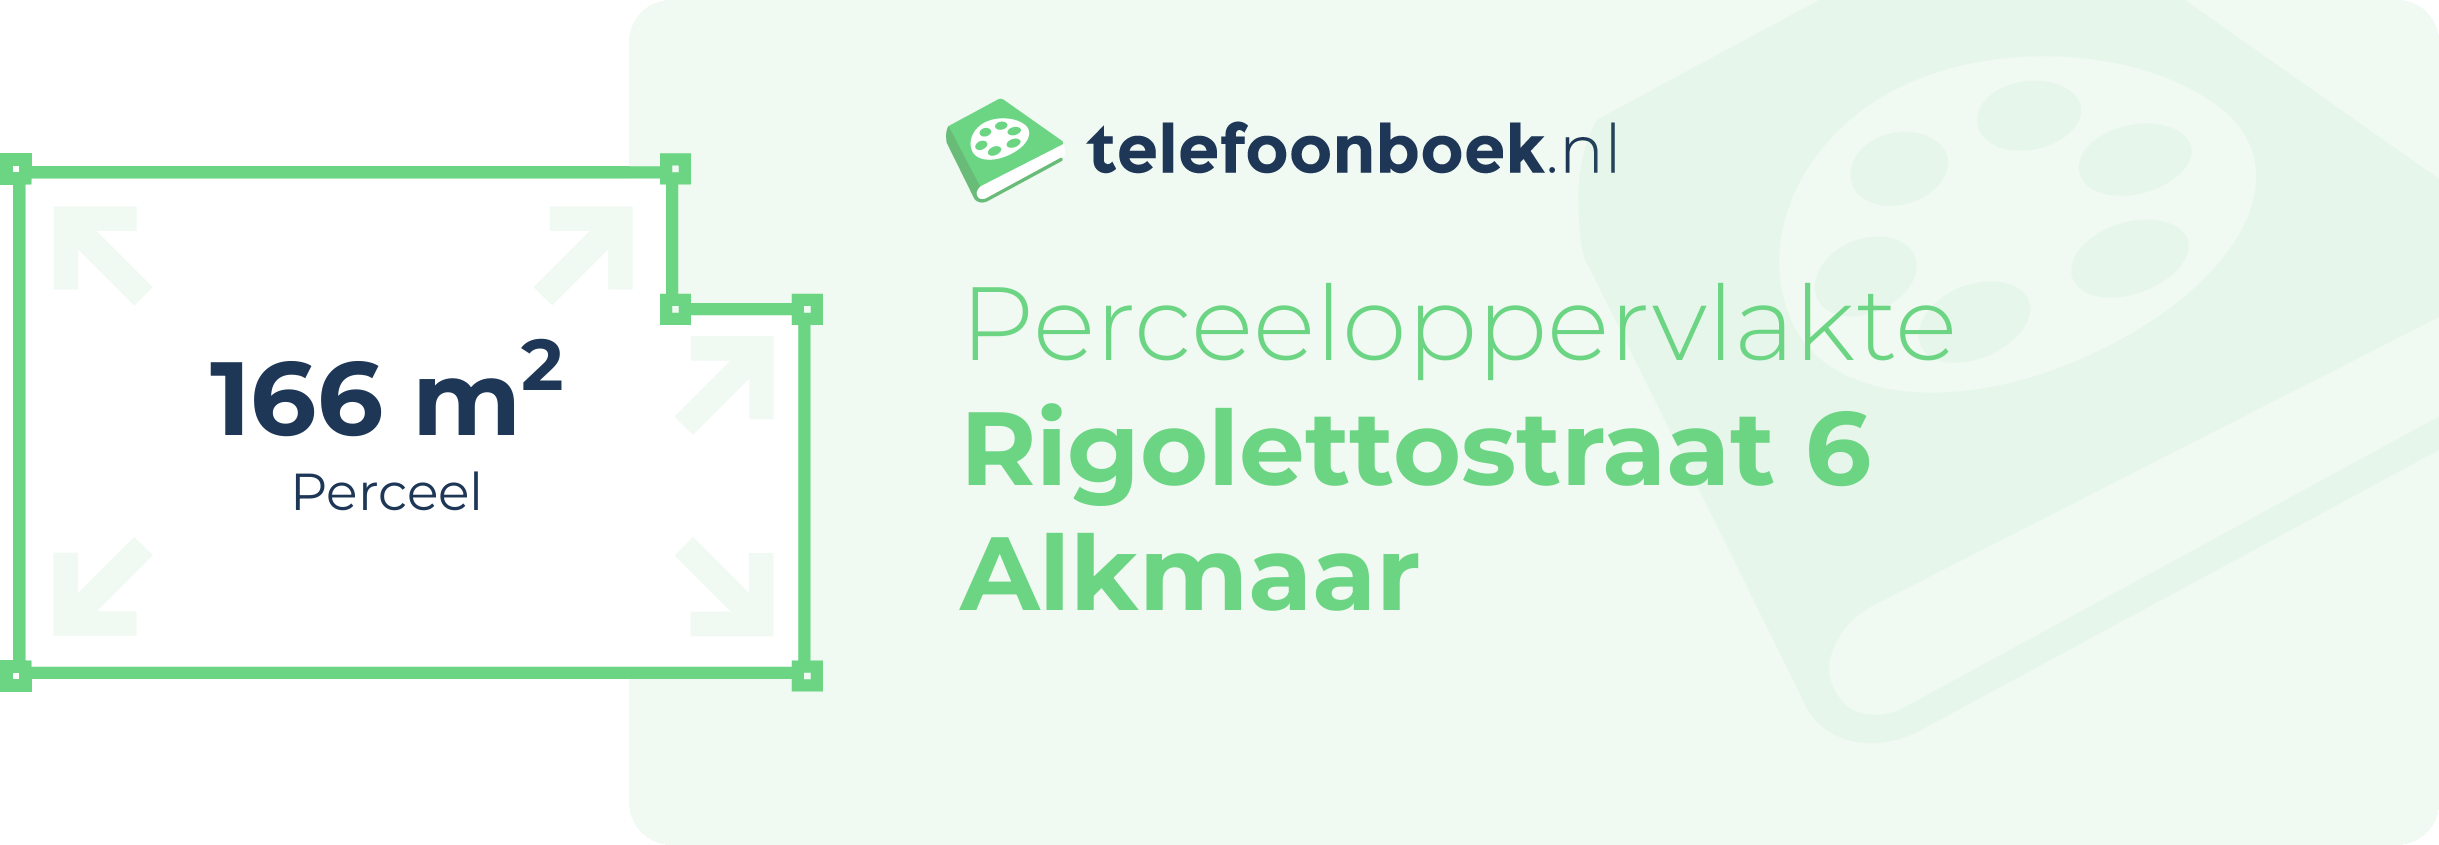 Perceeloppervlakte Rigolettostraat 6 Alkmaar